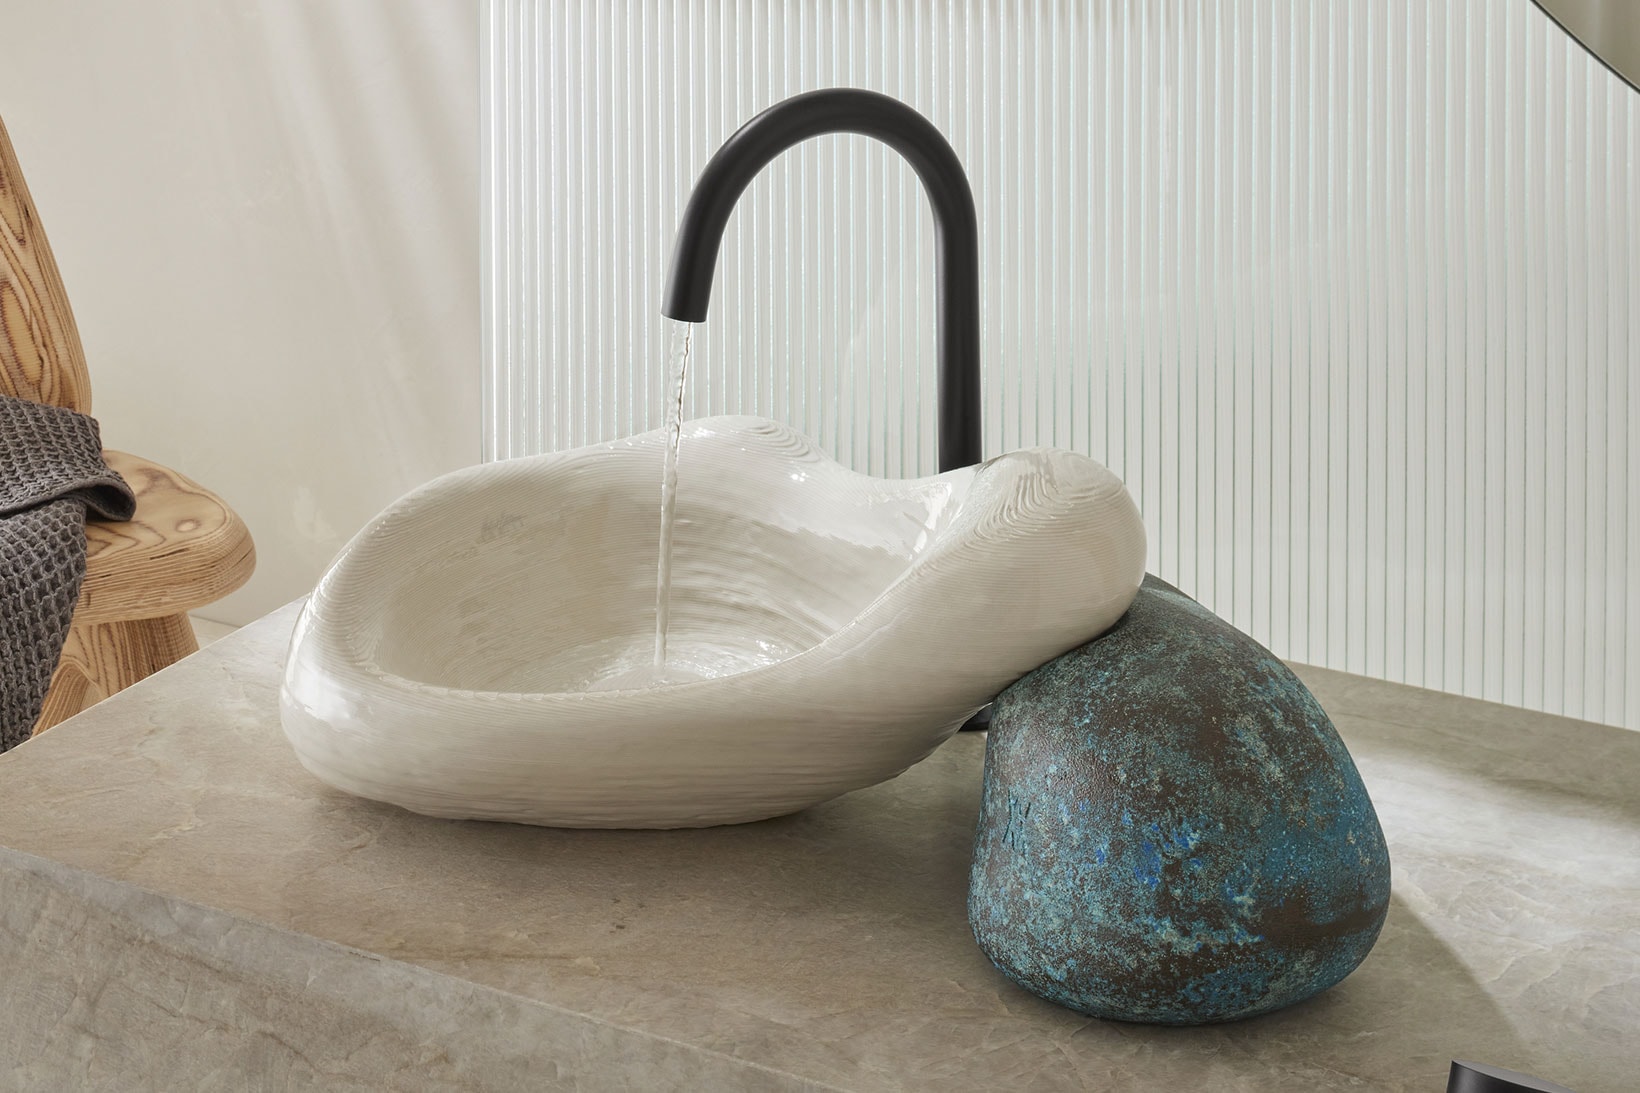 Daniel Arsham Kohler Rock.01 3D-Printed Bathroom Sink Design Details Water